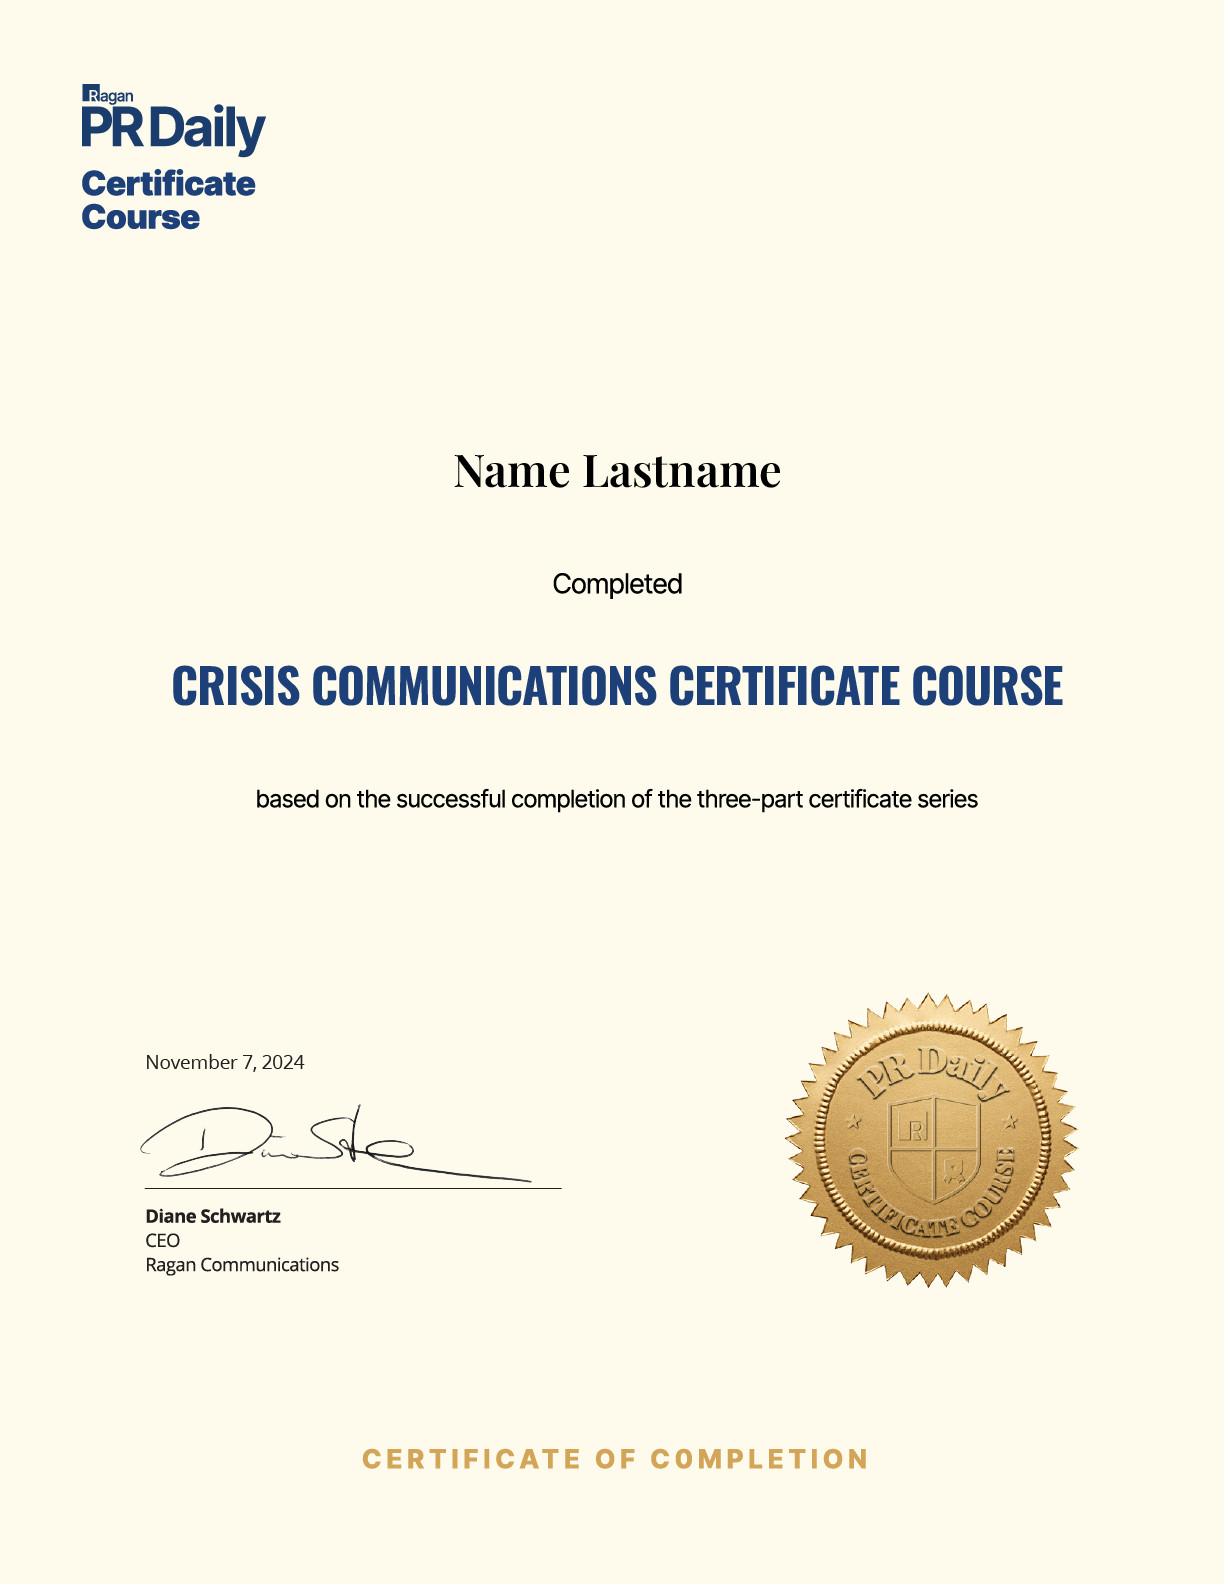 Crisis Communications Certificate Course Certificate